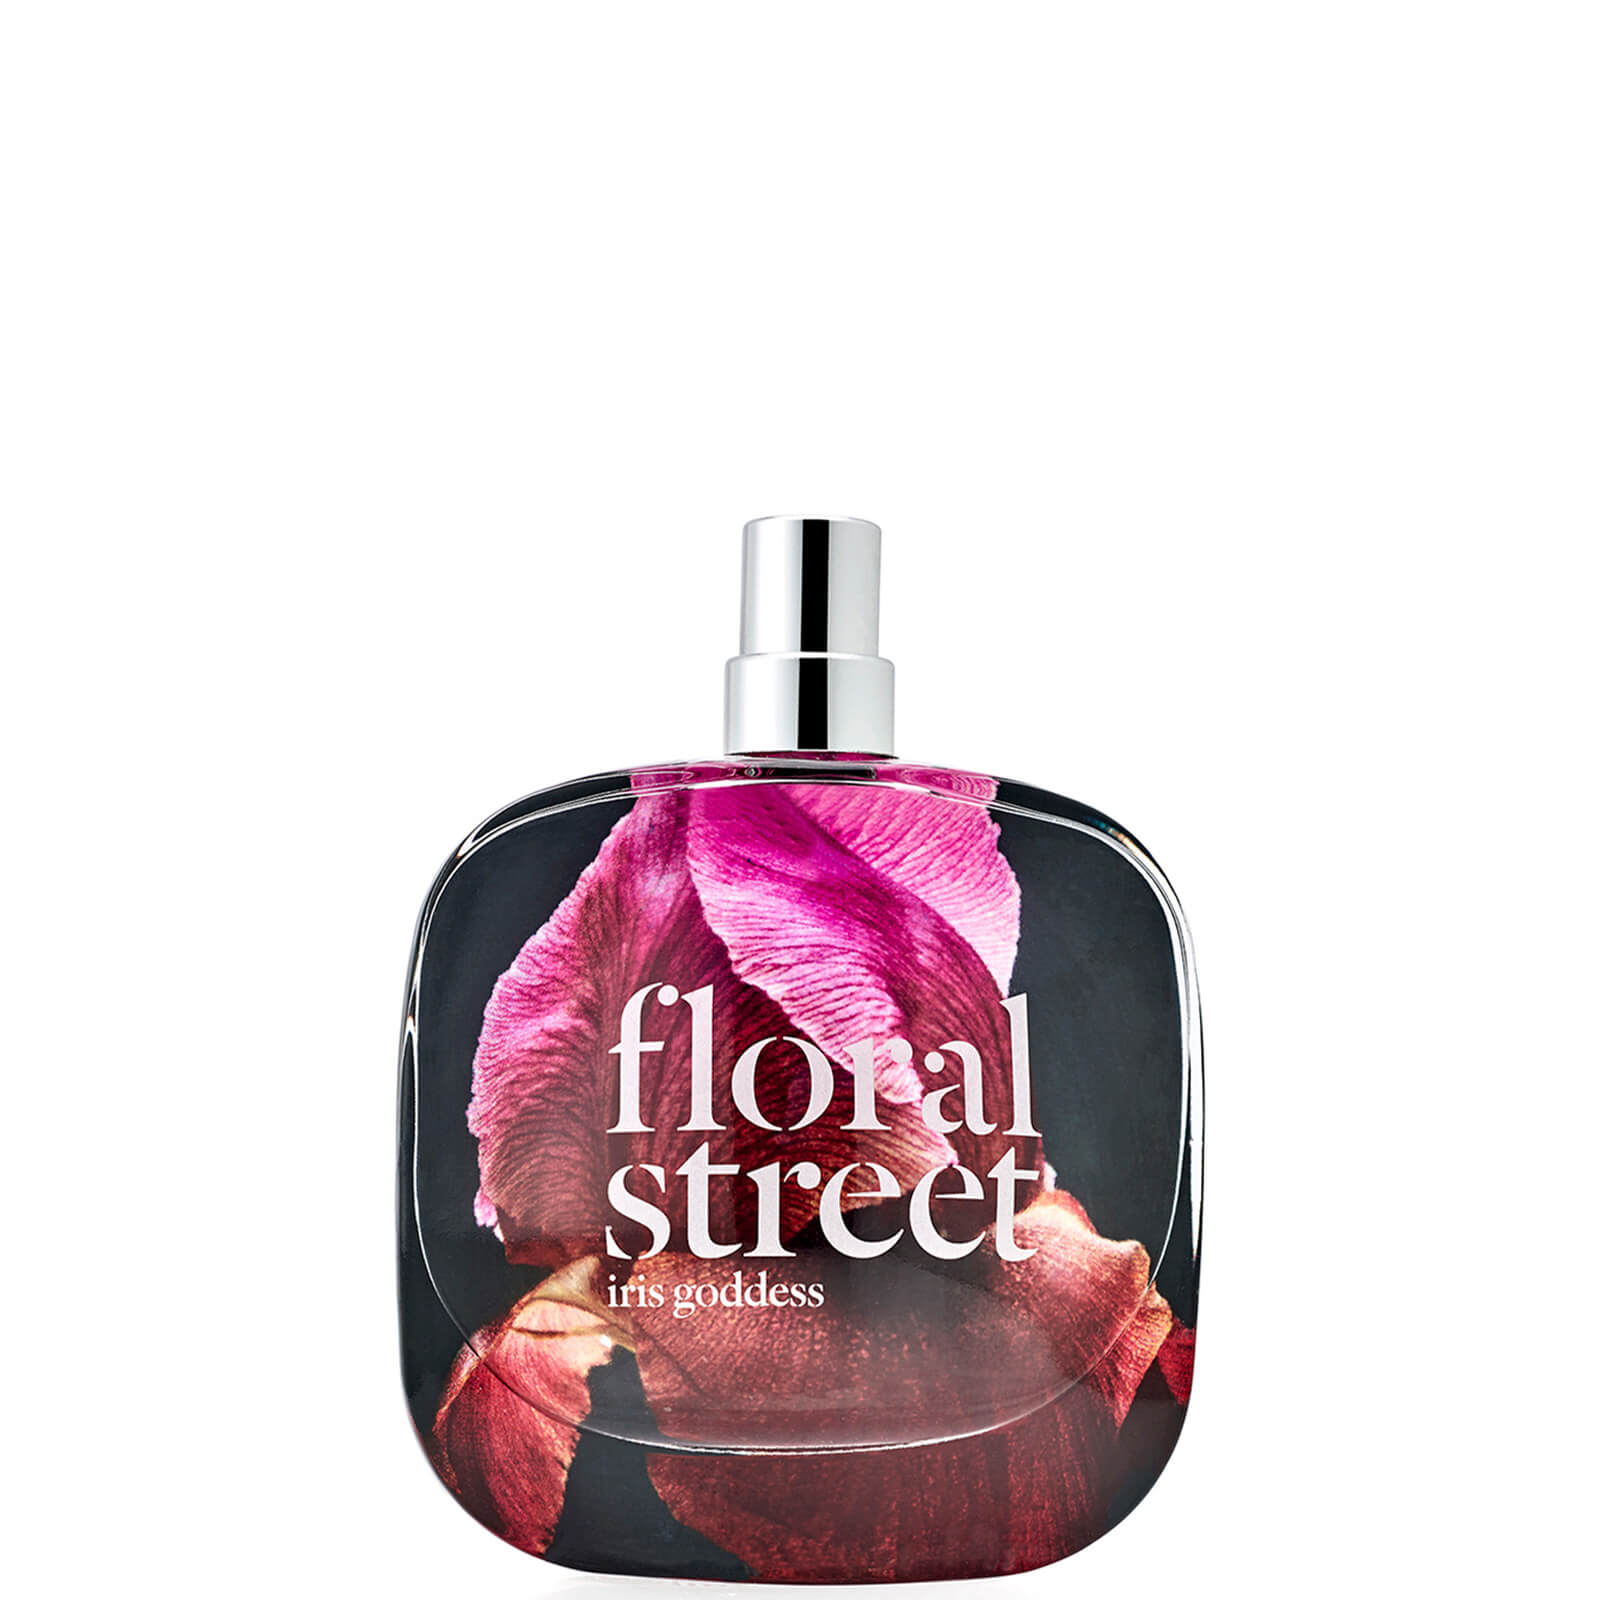 floral street iris goddess eau de parfum 100ml uomo